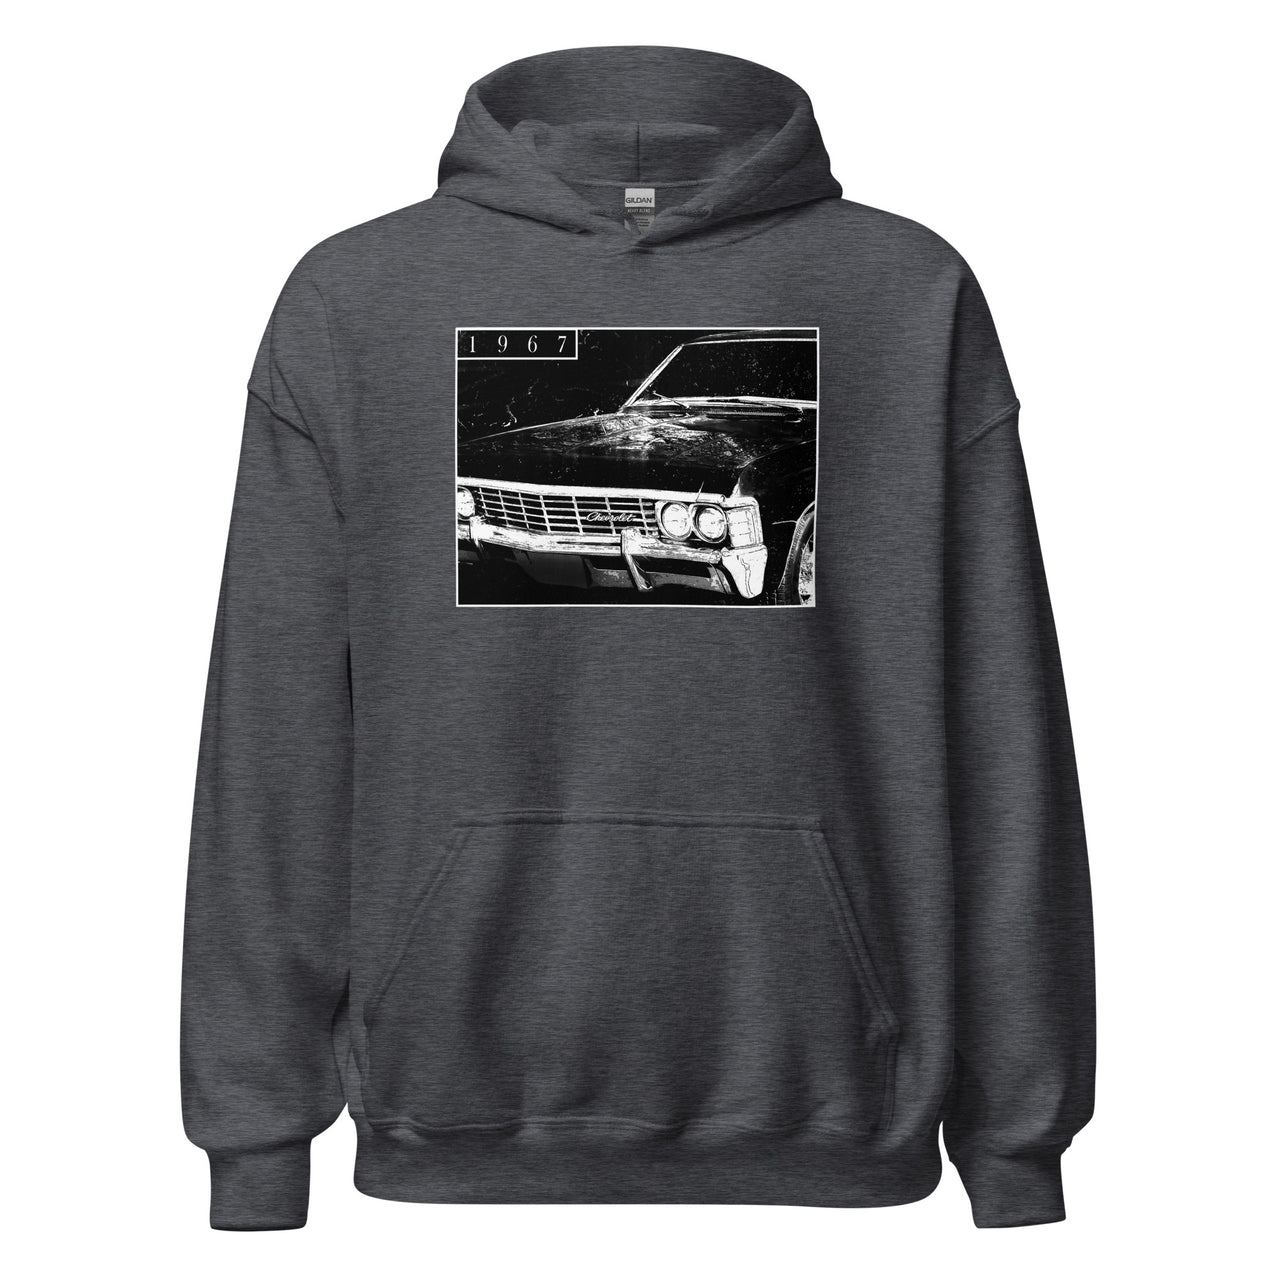 1967 Impala hoodie sweatshirt in gray